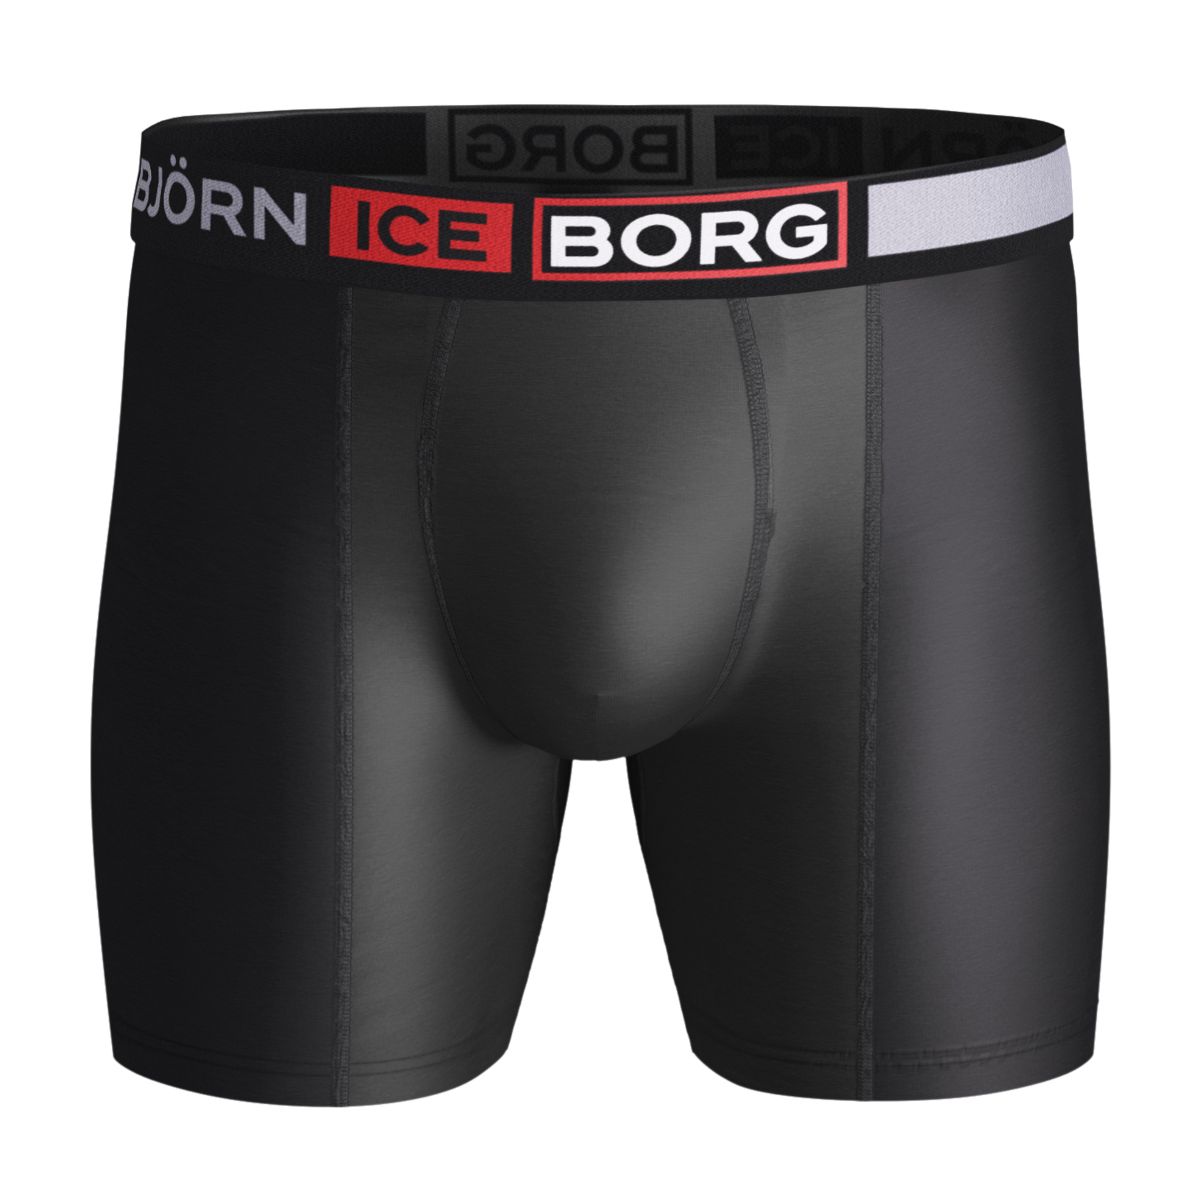 Bjorn Borg Ice Pierce Boxer Shorts 1911-1449-90651